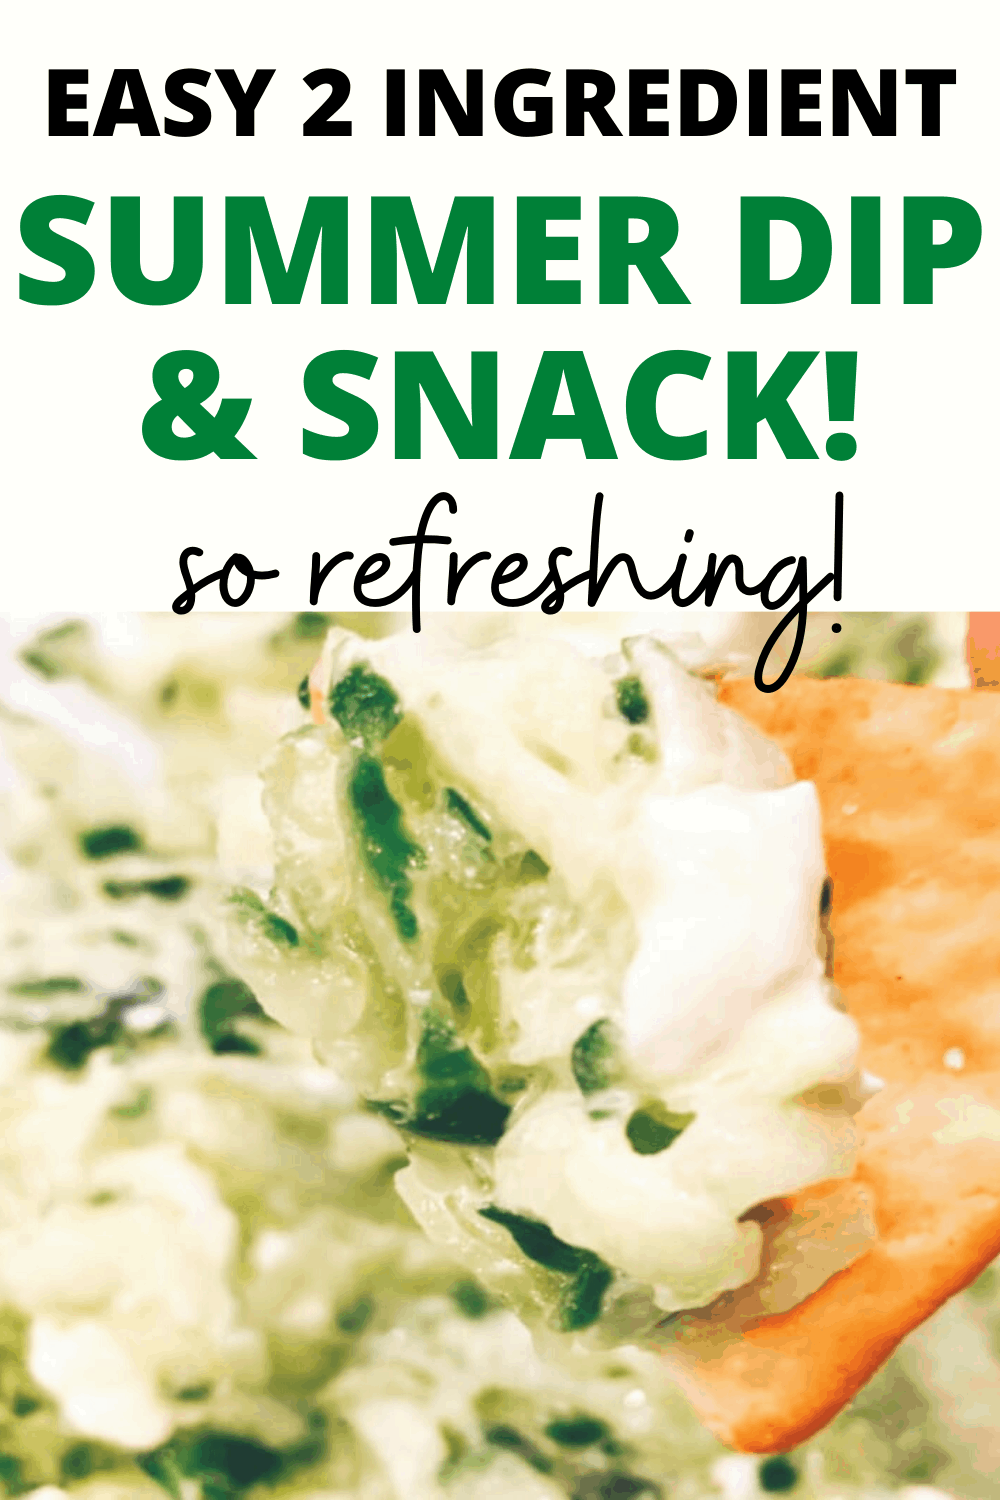 cucumber dip on cracker for summer food ideas